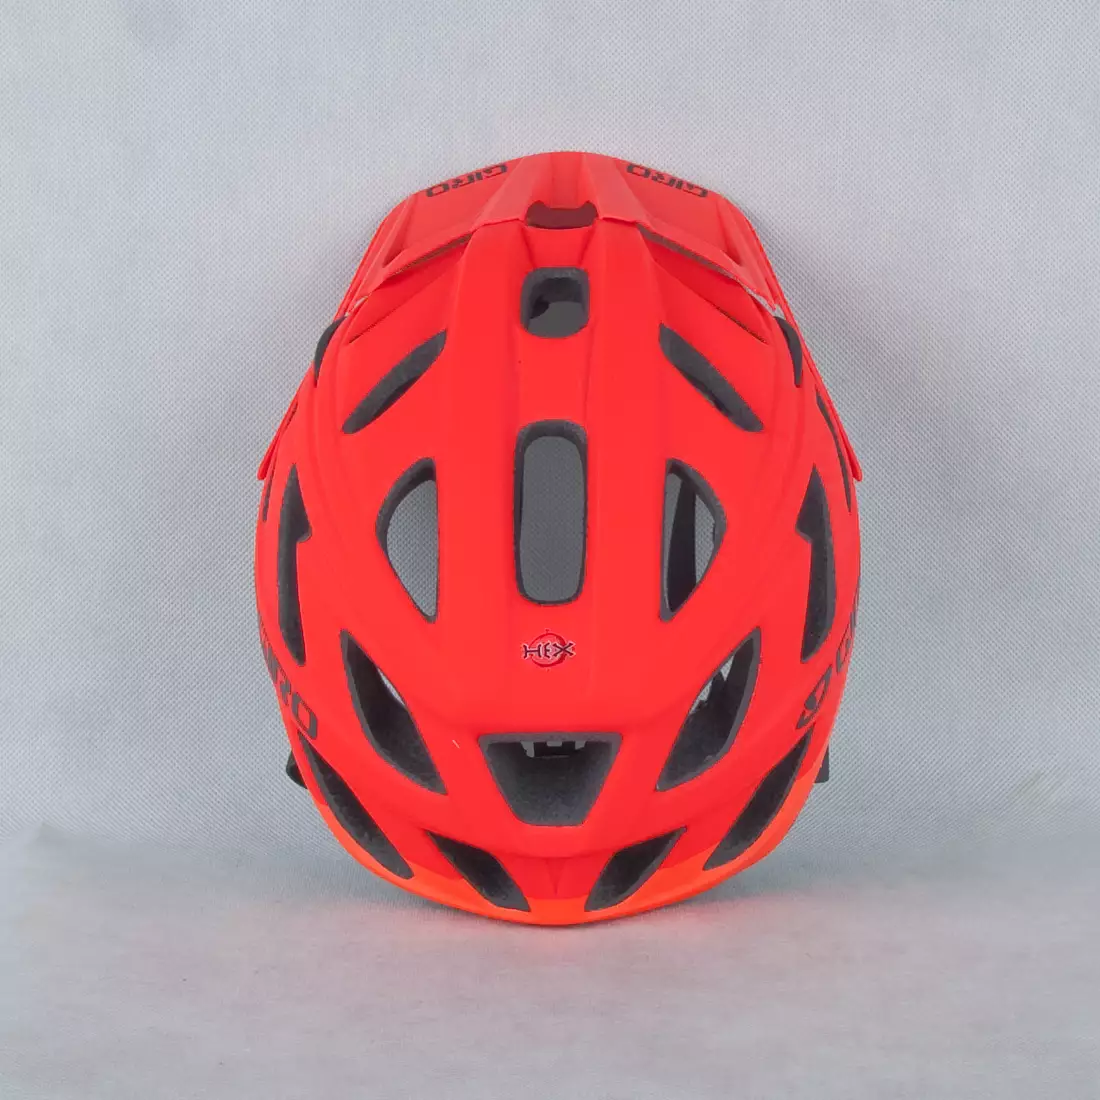 GIRO HEX - piros kerékpáros sisak